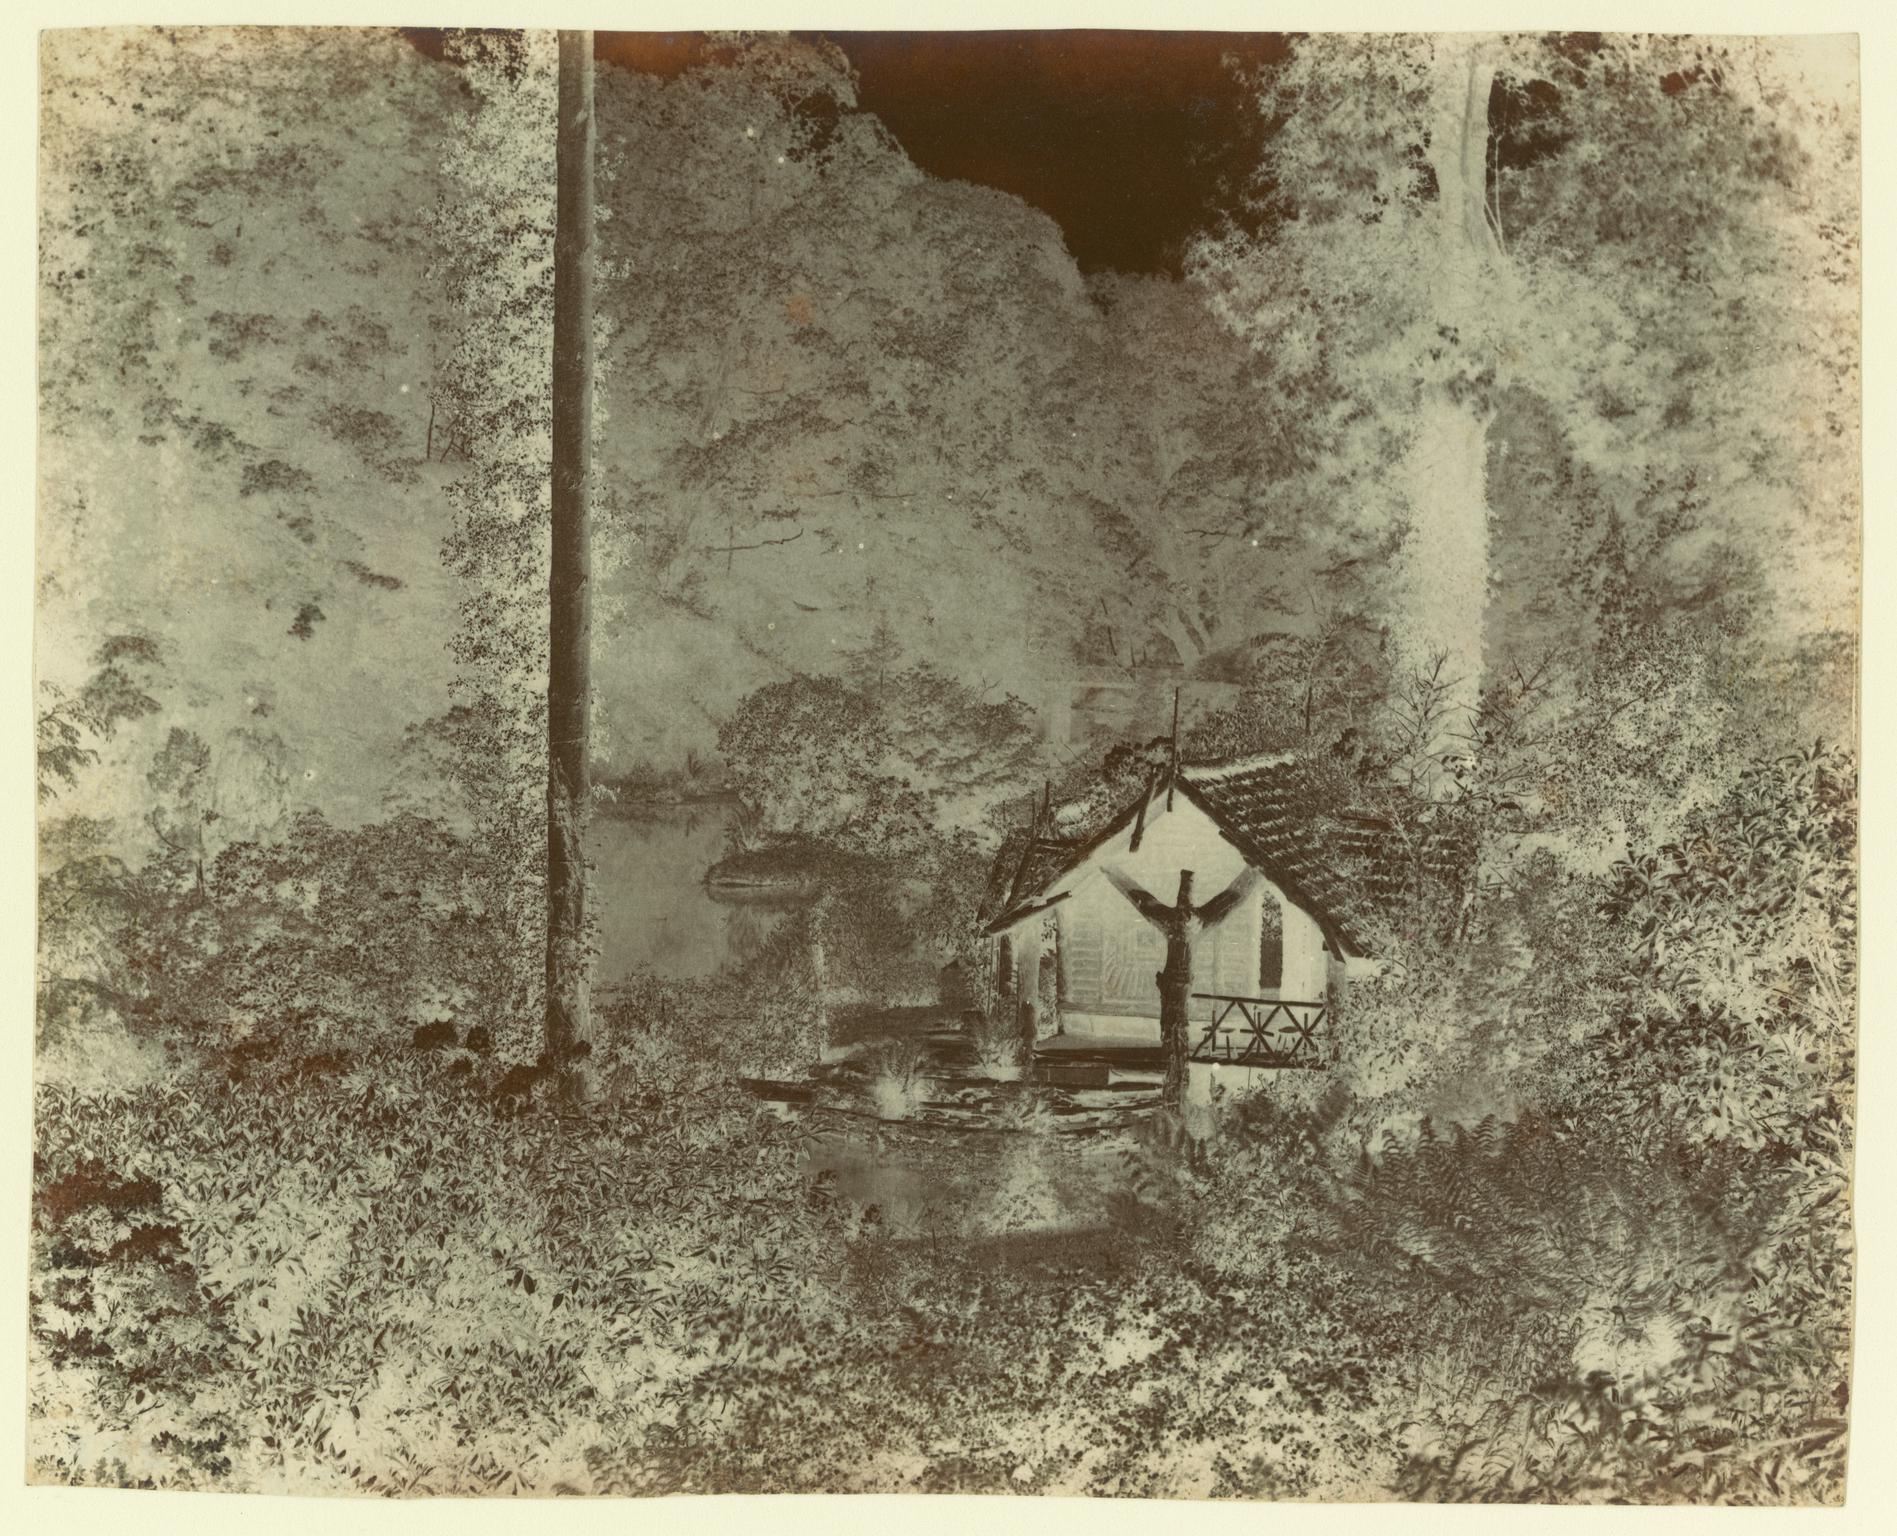 Penllergare, shanty on upper lake, paper negative